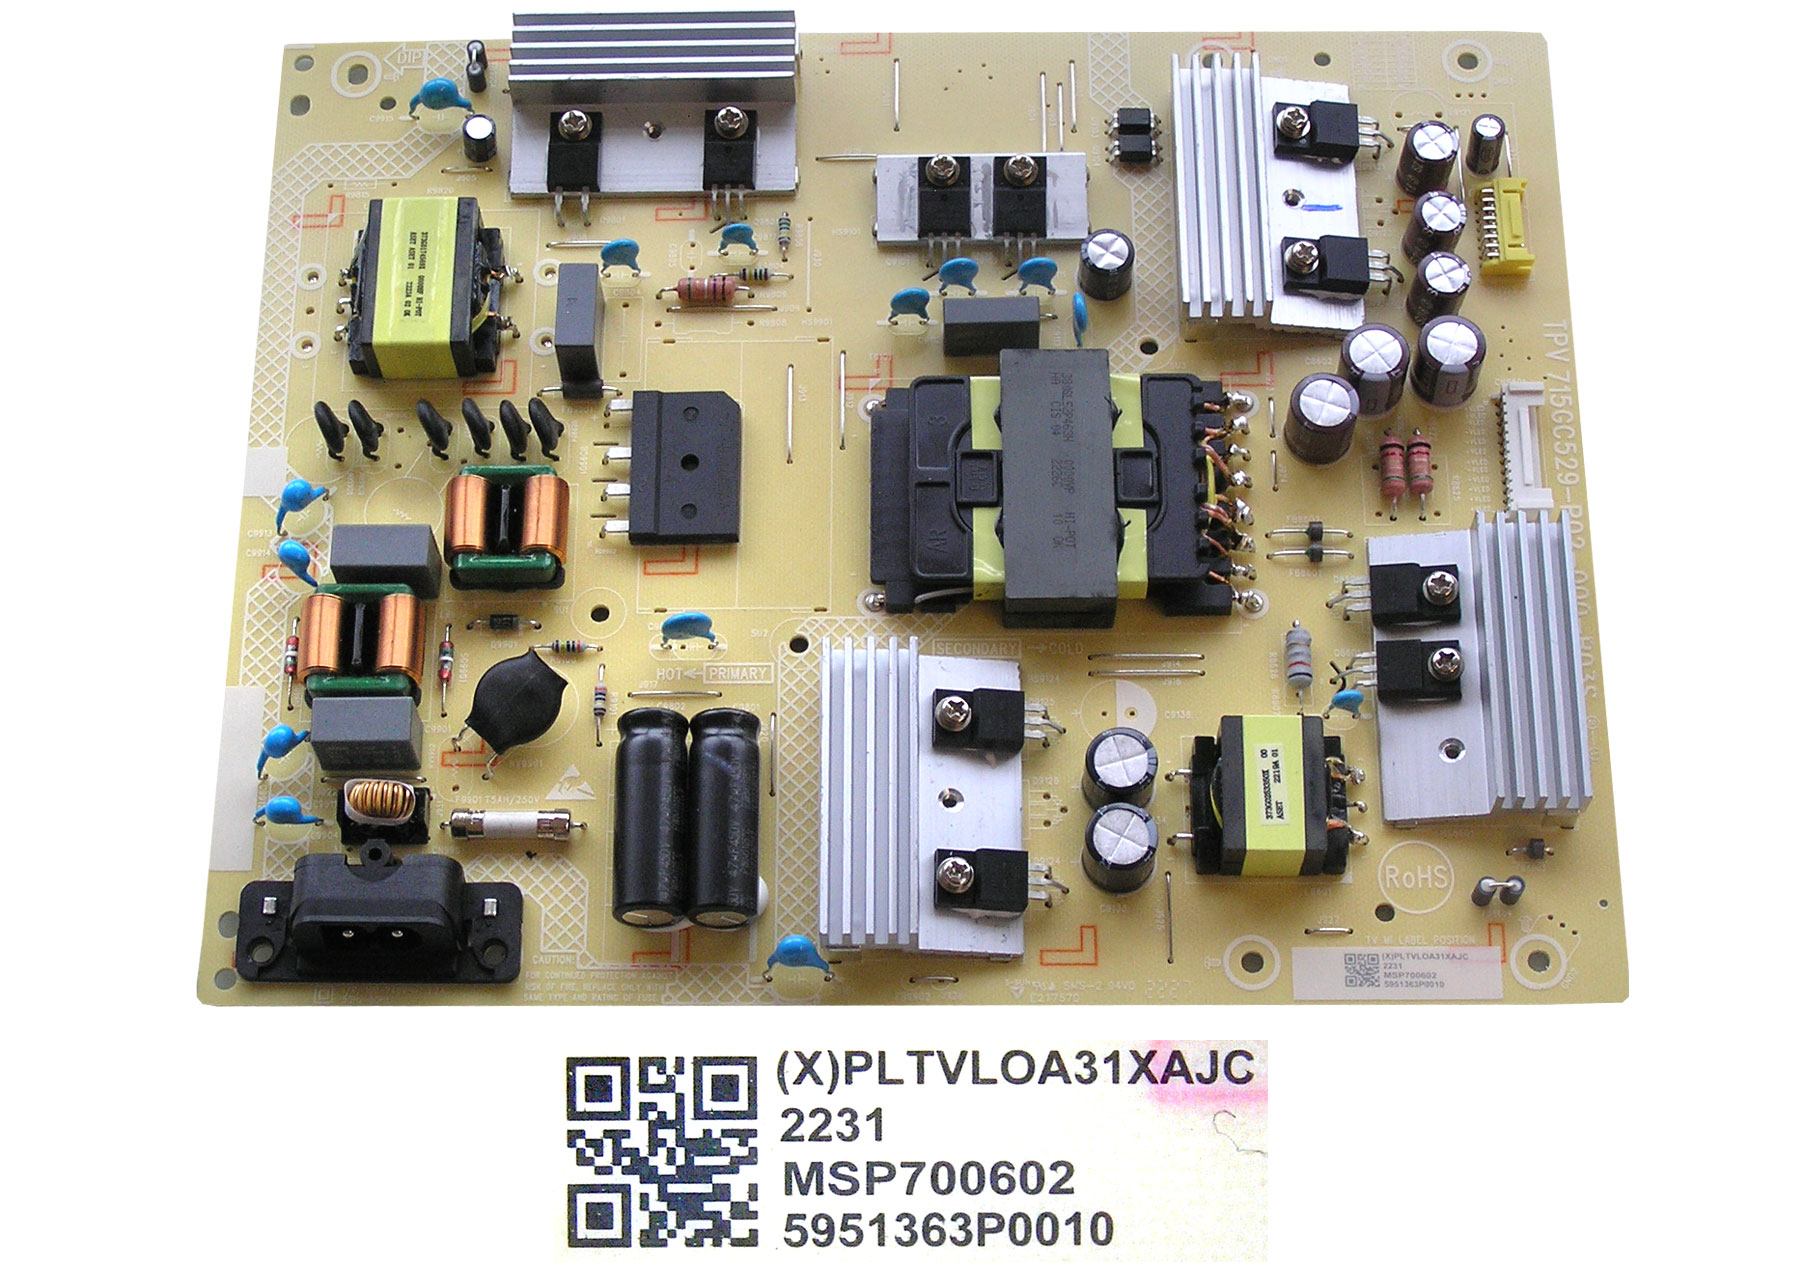 LCD modul zdroj Philips PLTVLOA31XAJC / SMPS power supply board 715GC529 - P02 - 000 - B03S